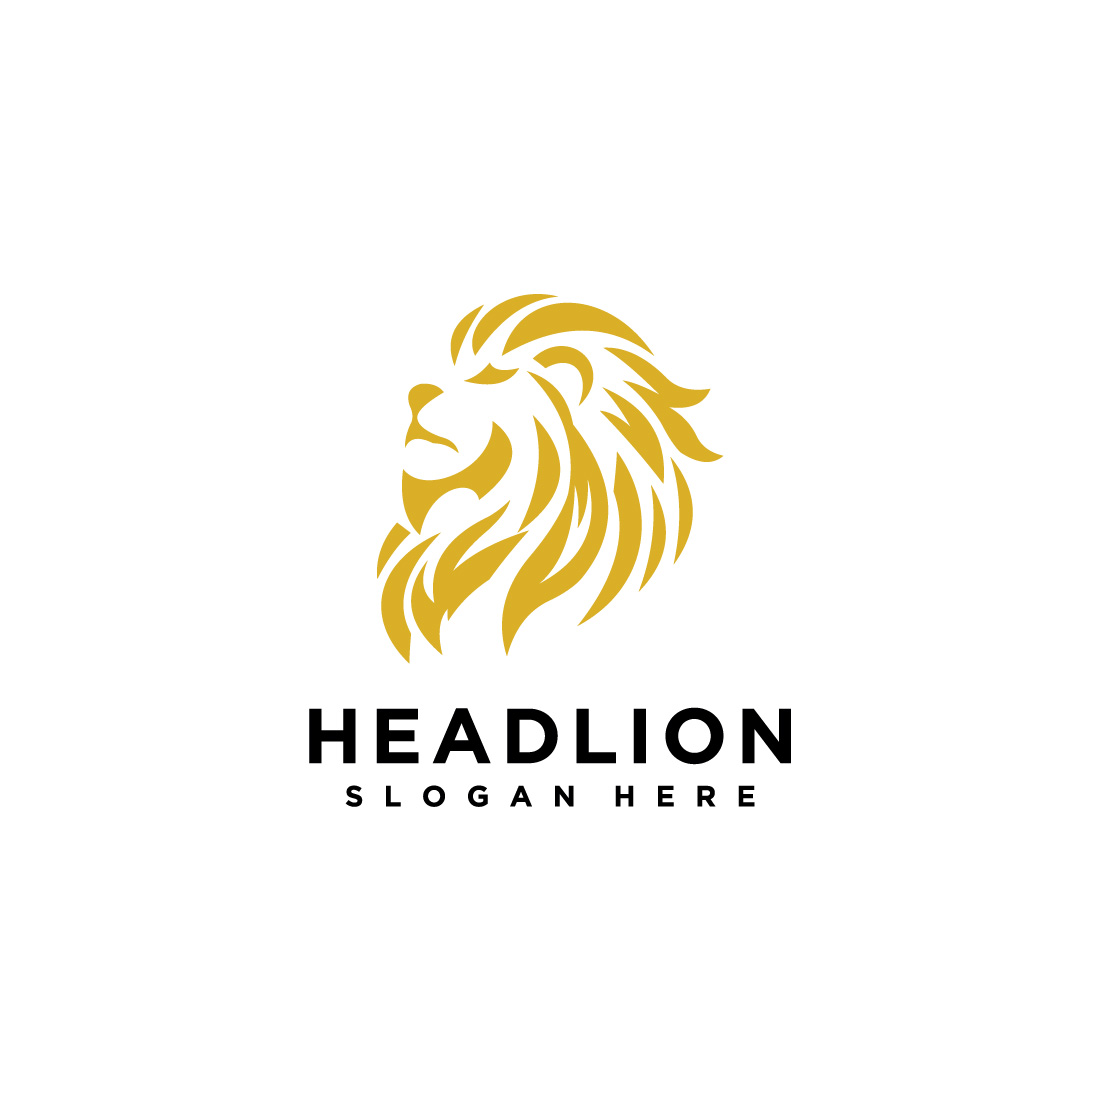 lion head logo preview image.